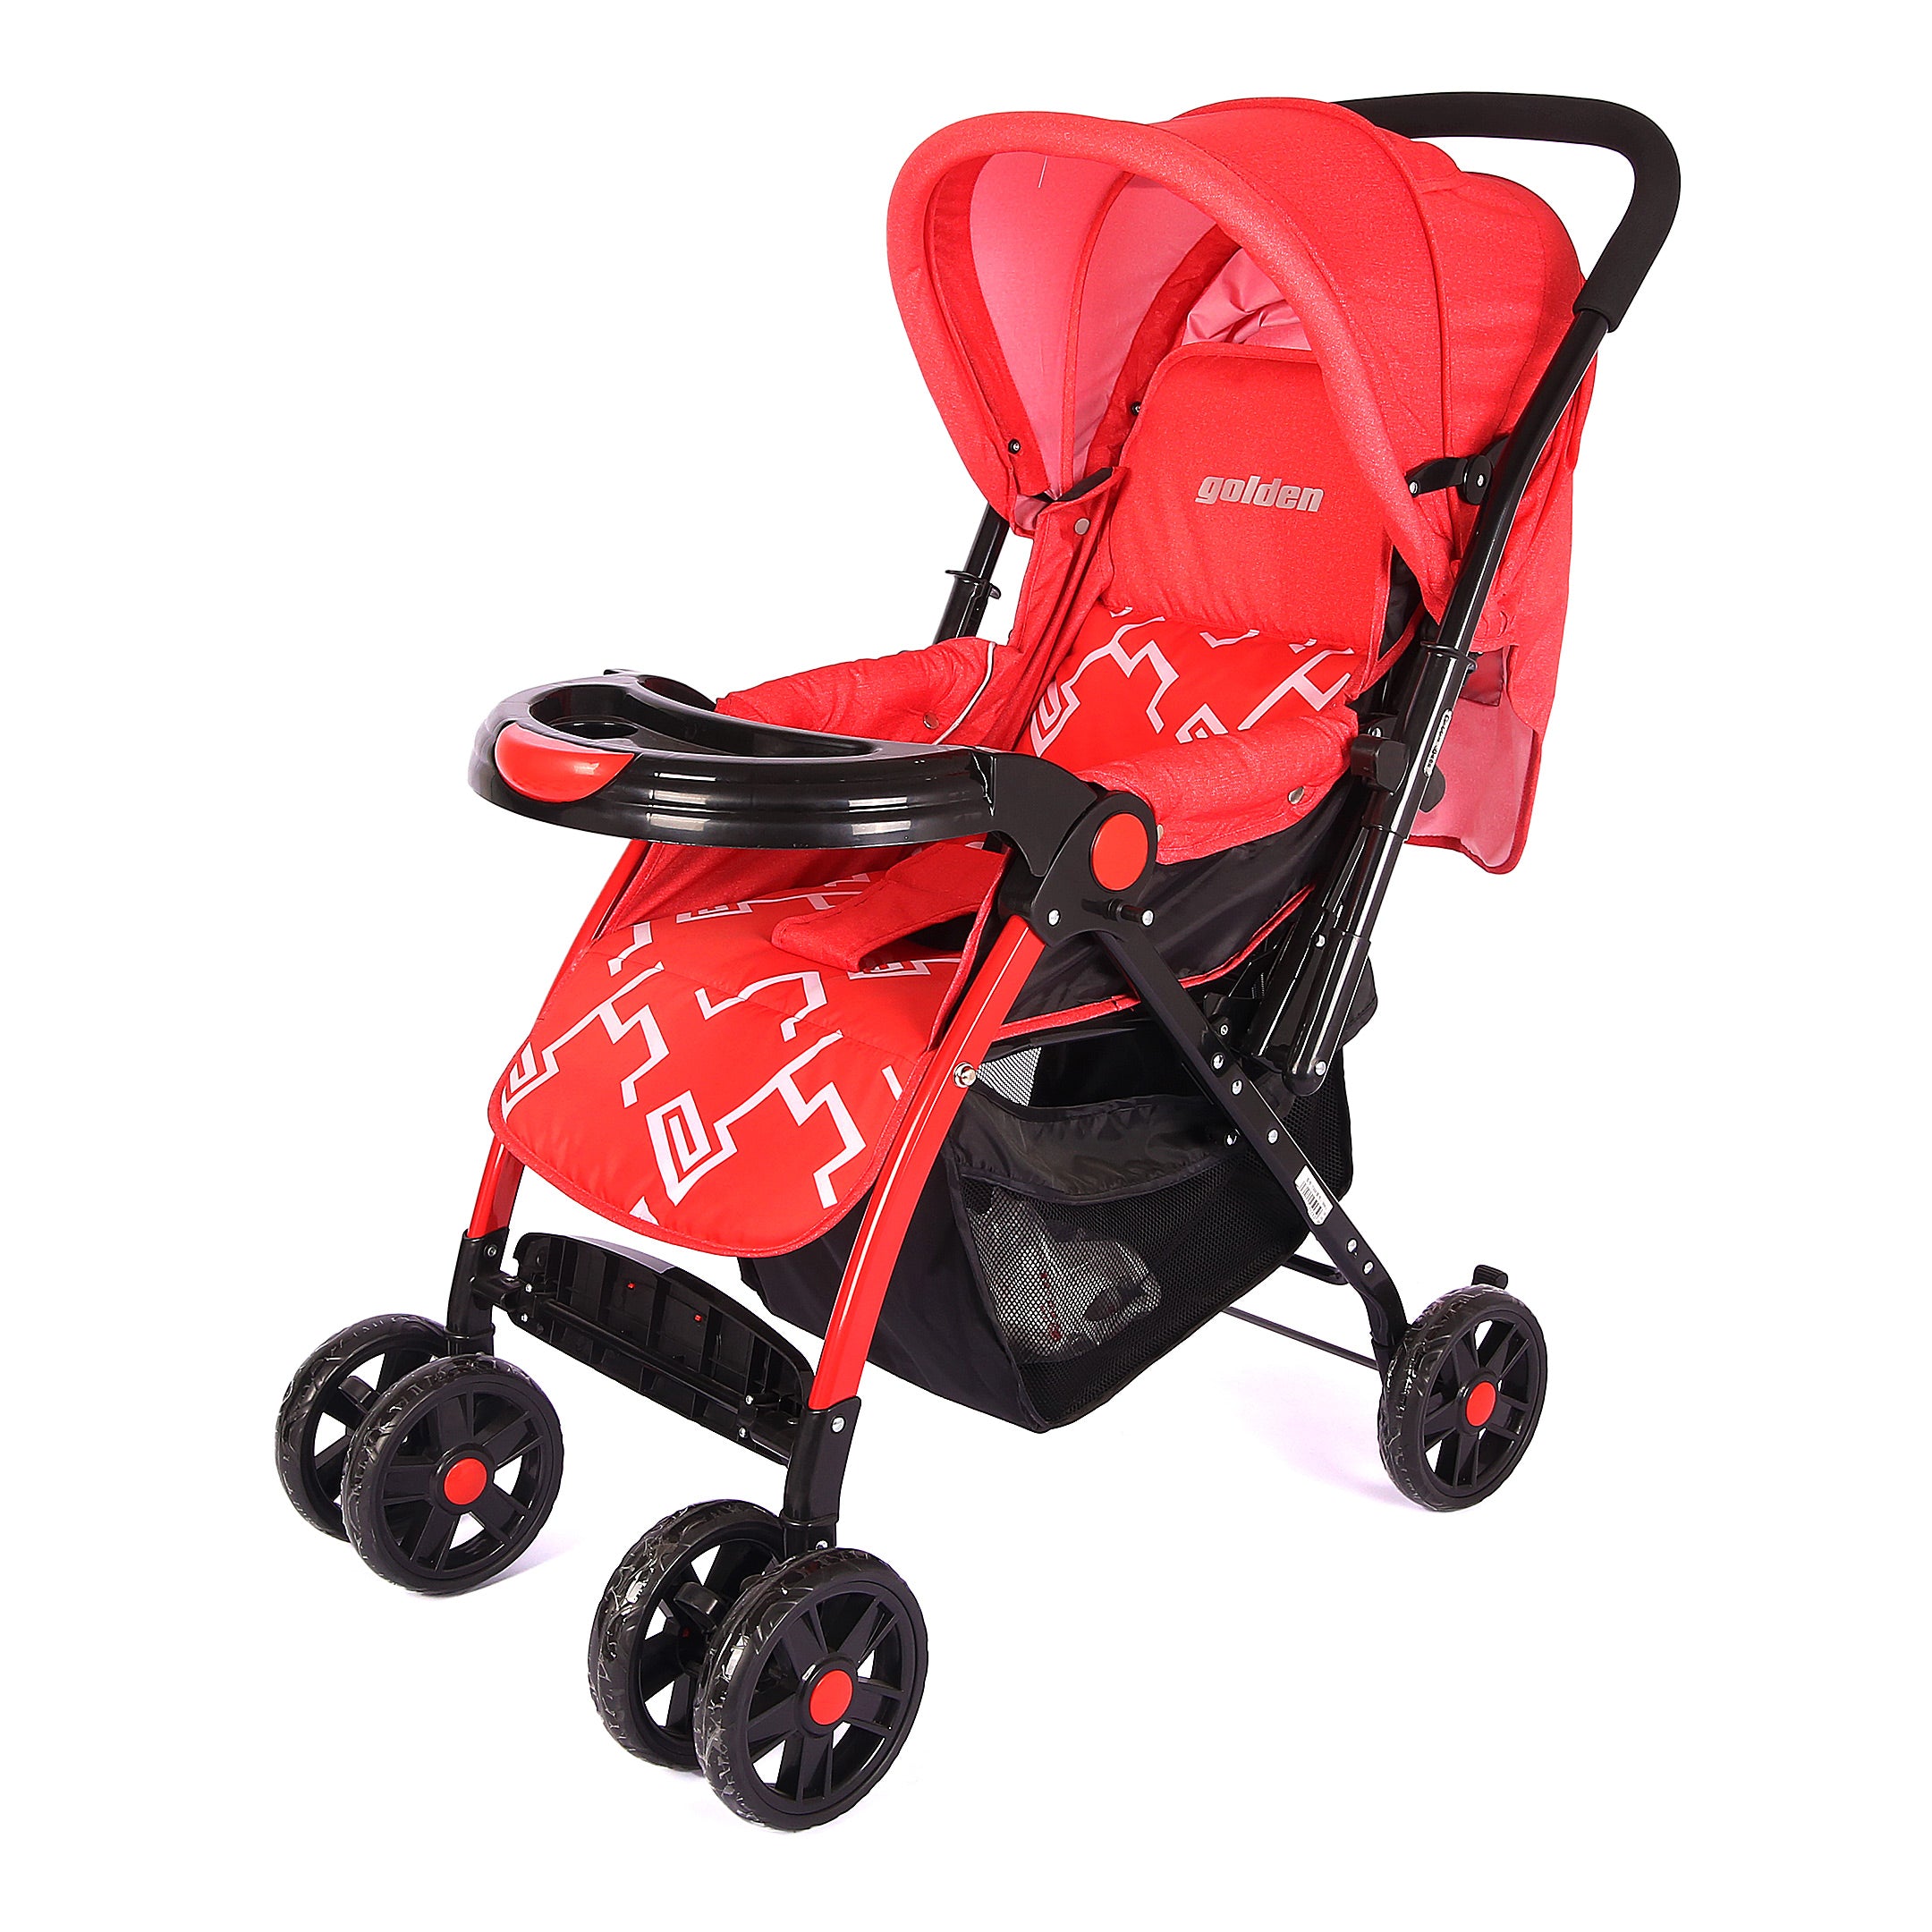 Gold Baby 6 wheels Stroller - Red